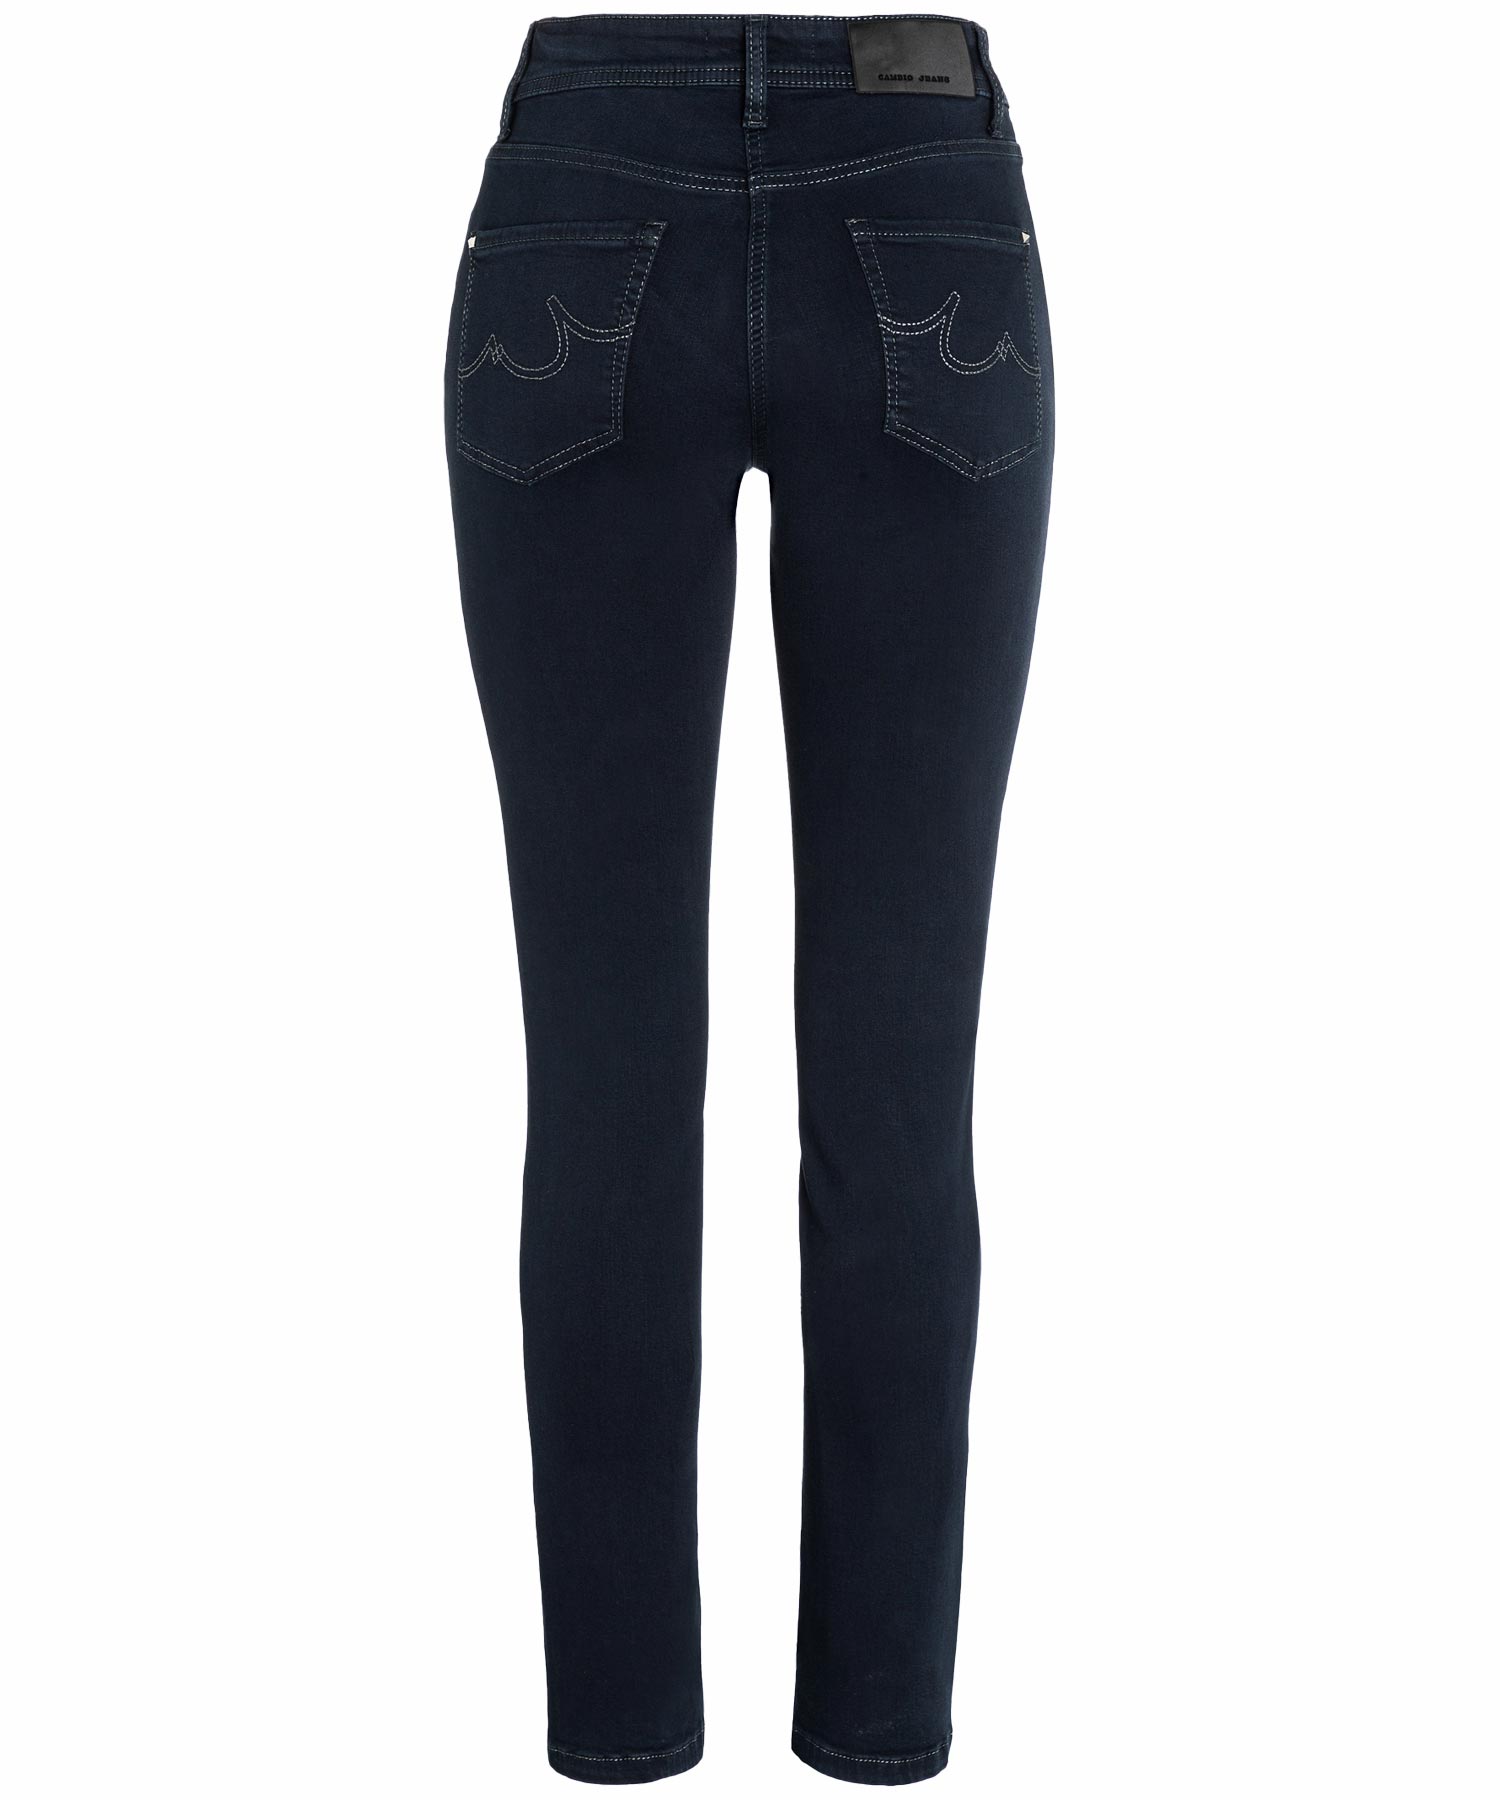 Jeans Parla von Cambio in black-blue overdyed